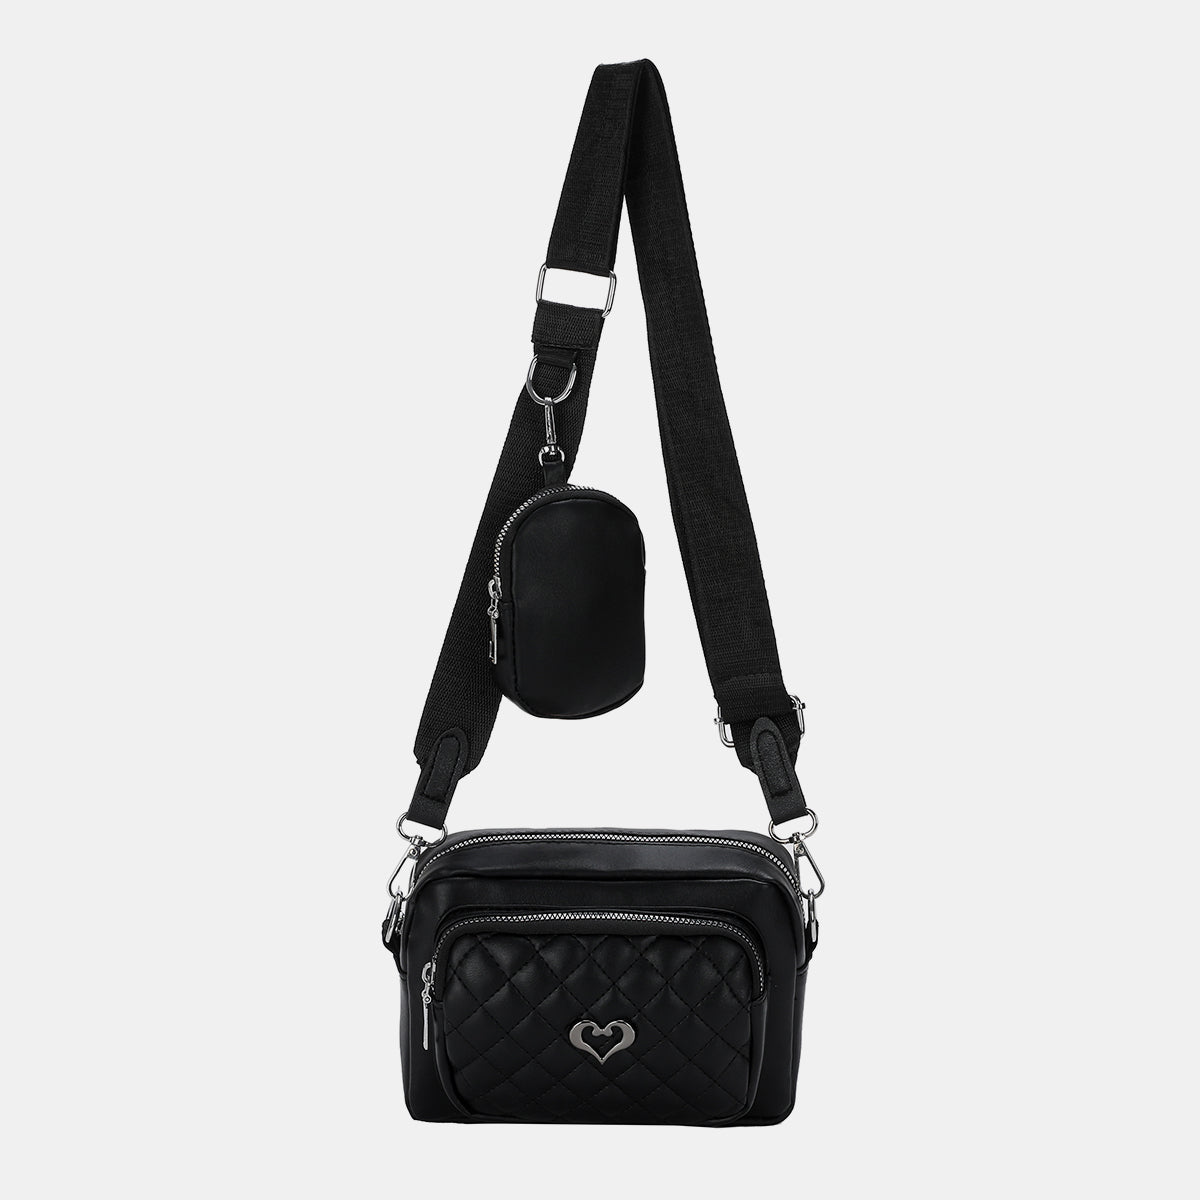 PU Leather Adjustable Strap Crossbody Bag Black One Size